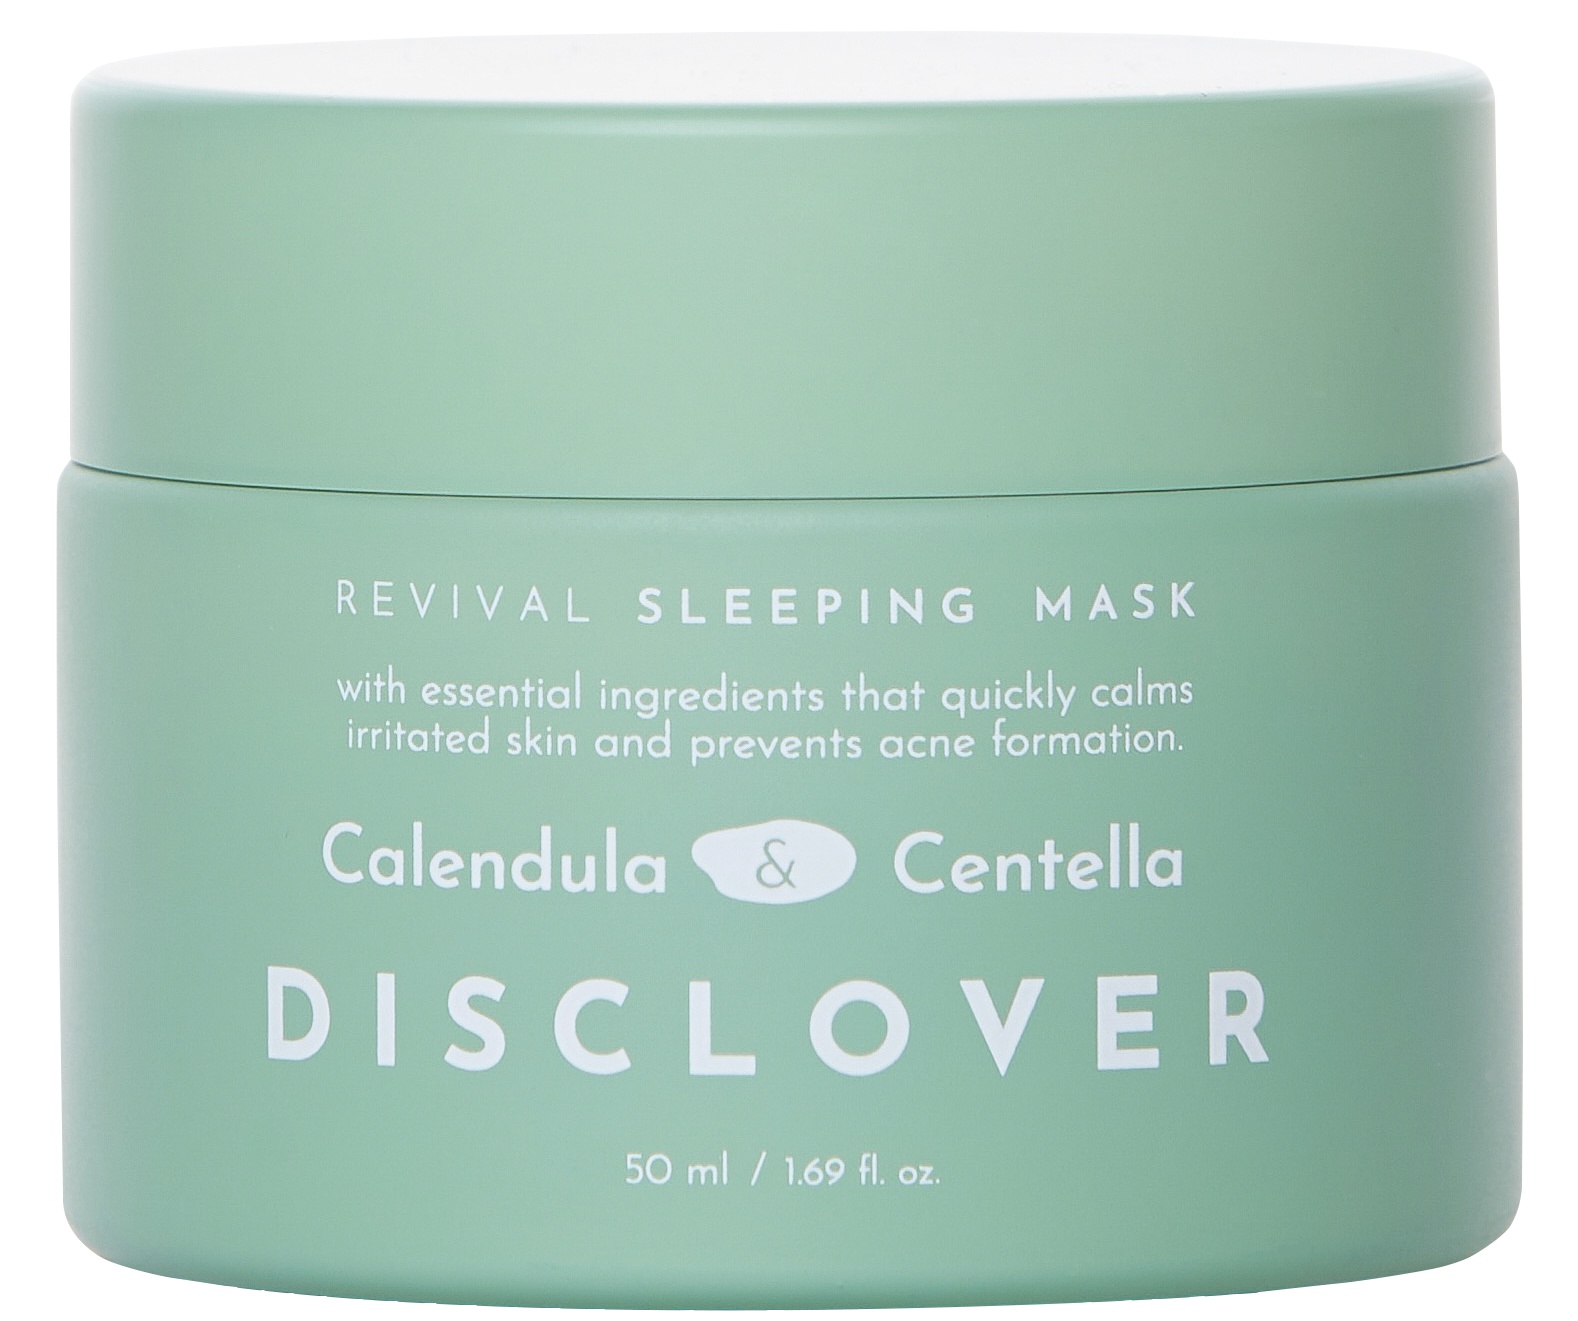 DISCLOVER Calendula & Centella Sleeping Mask